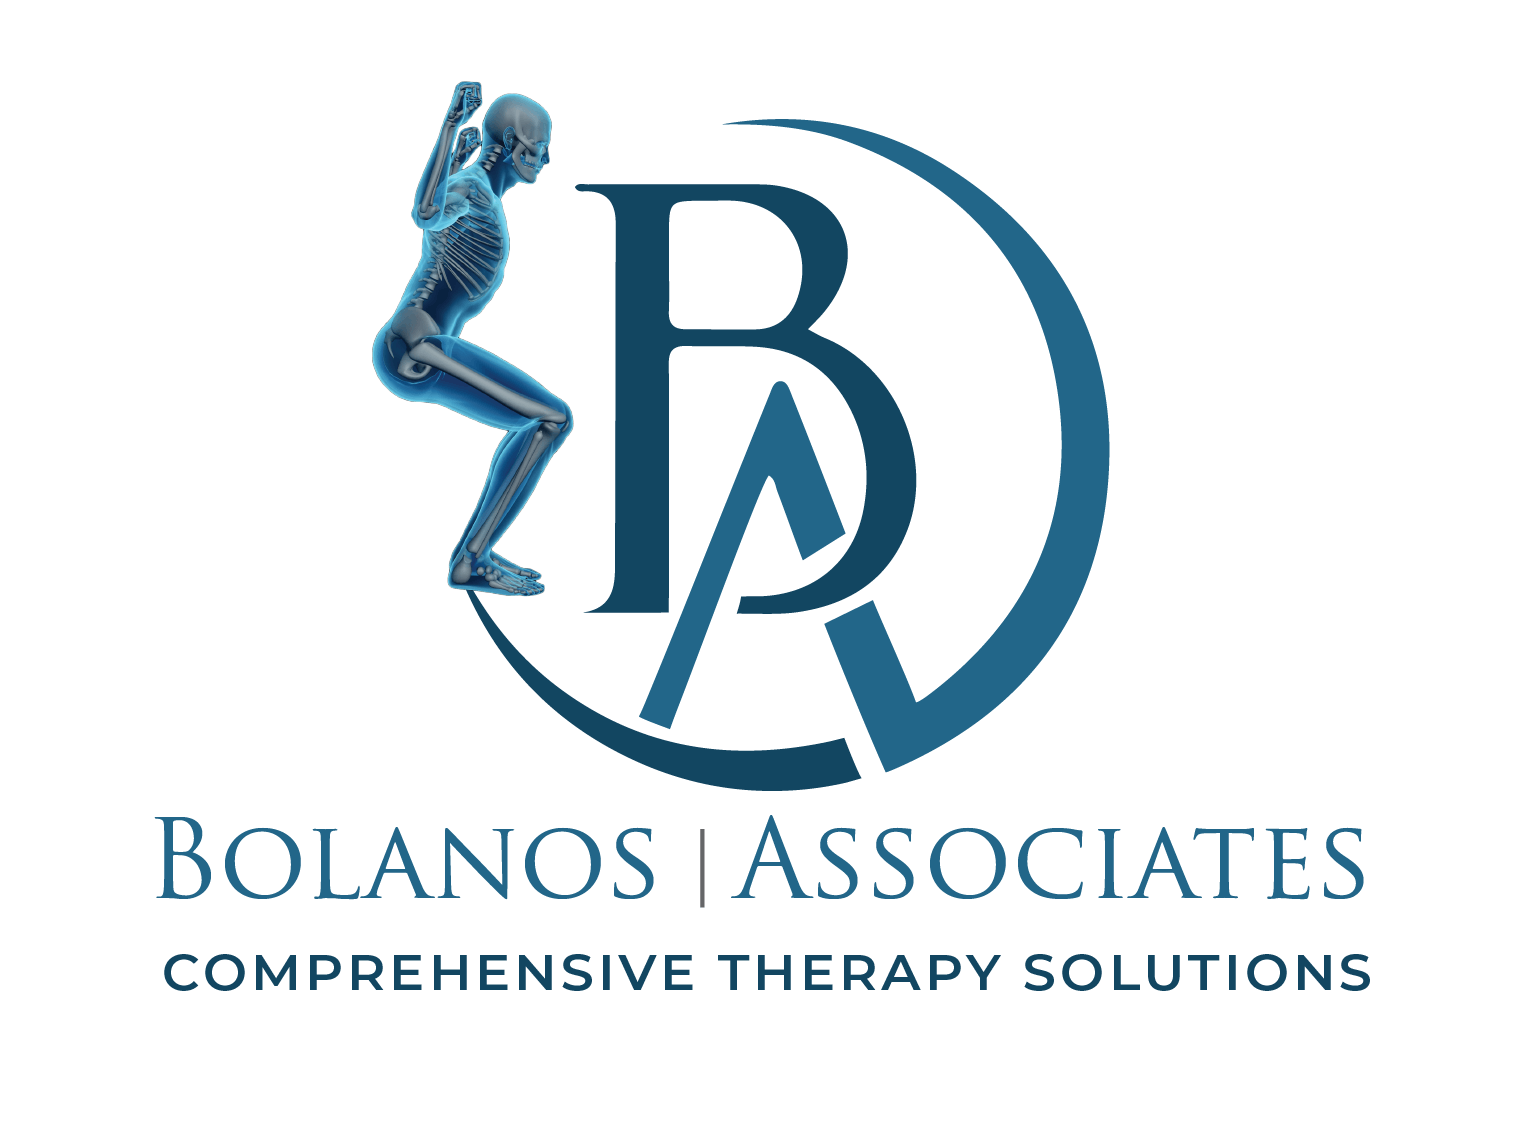 Bolanos Associates Comprehensive Therapy Solutions